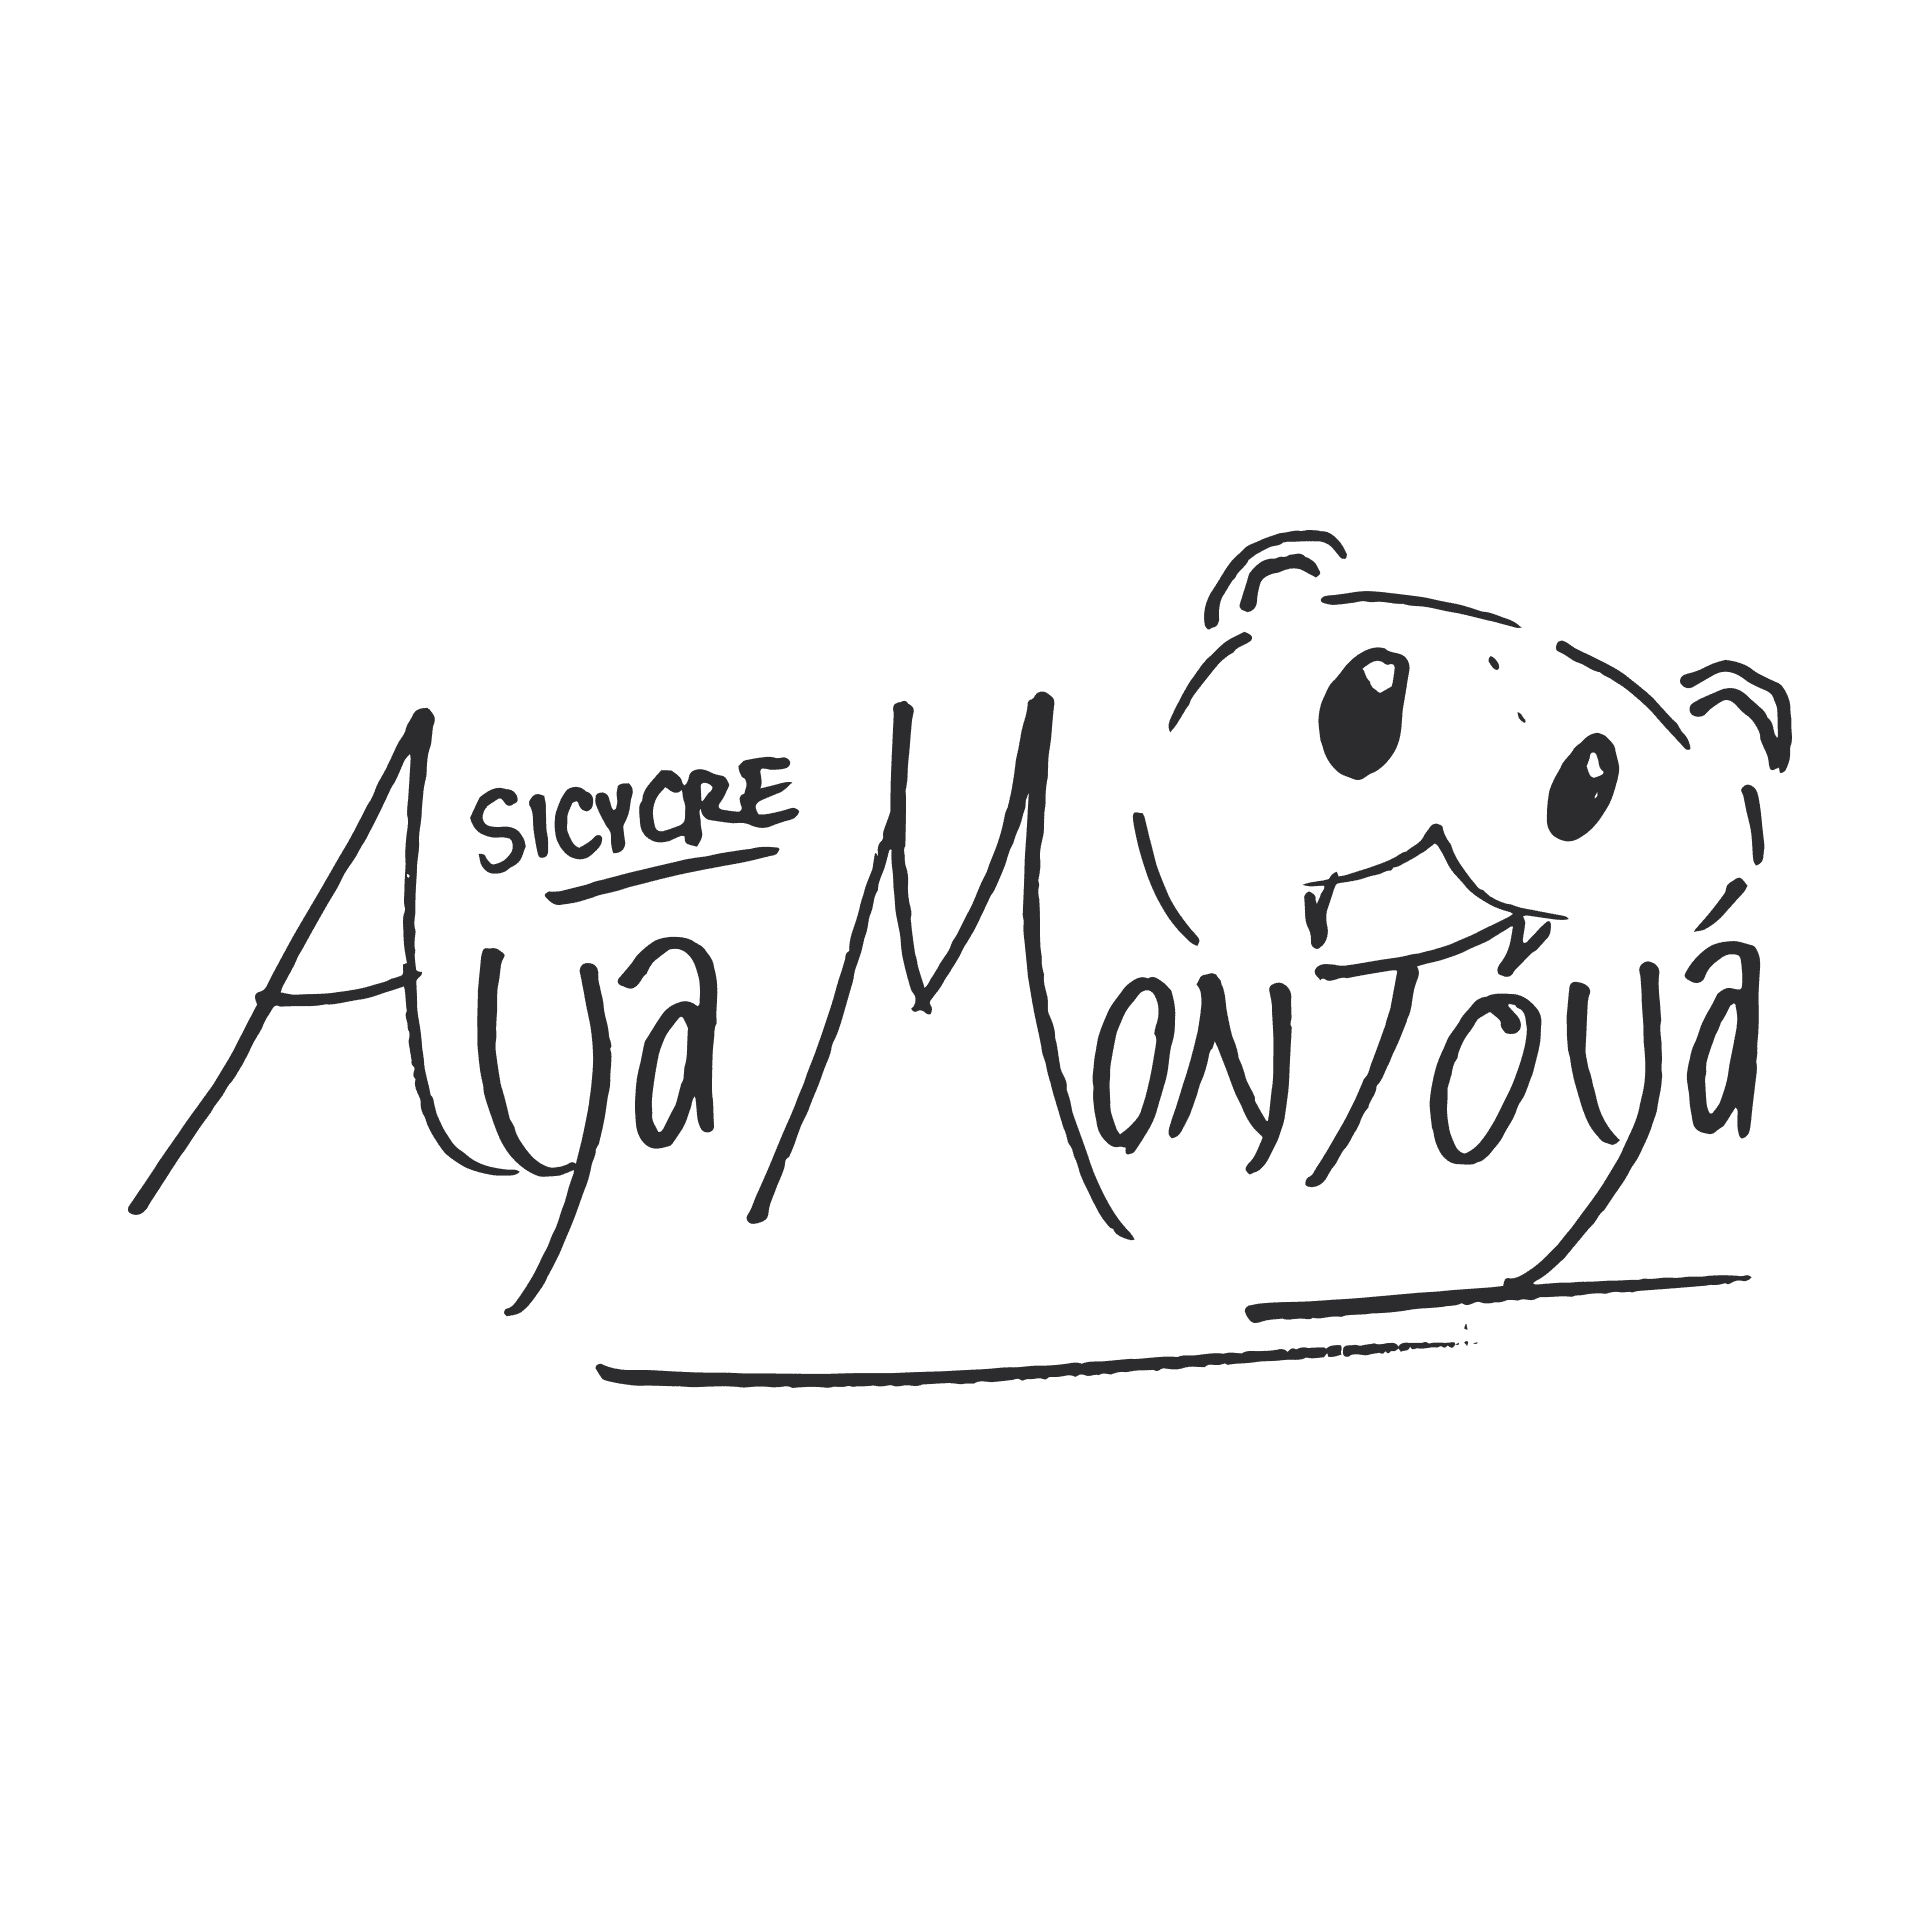 Aya Montoya